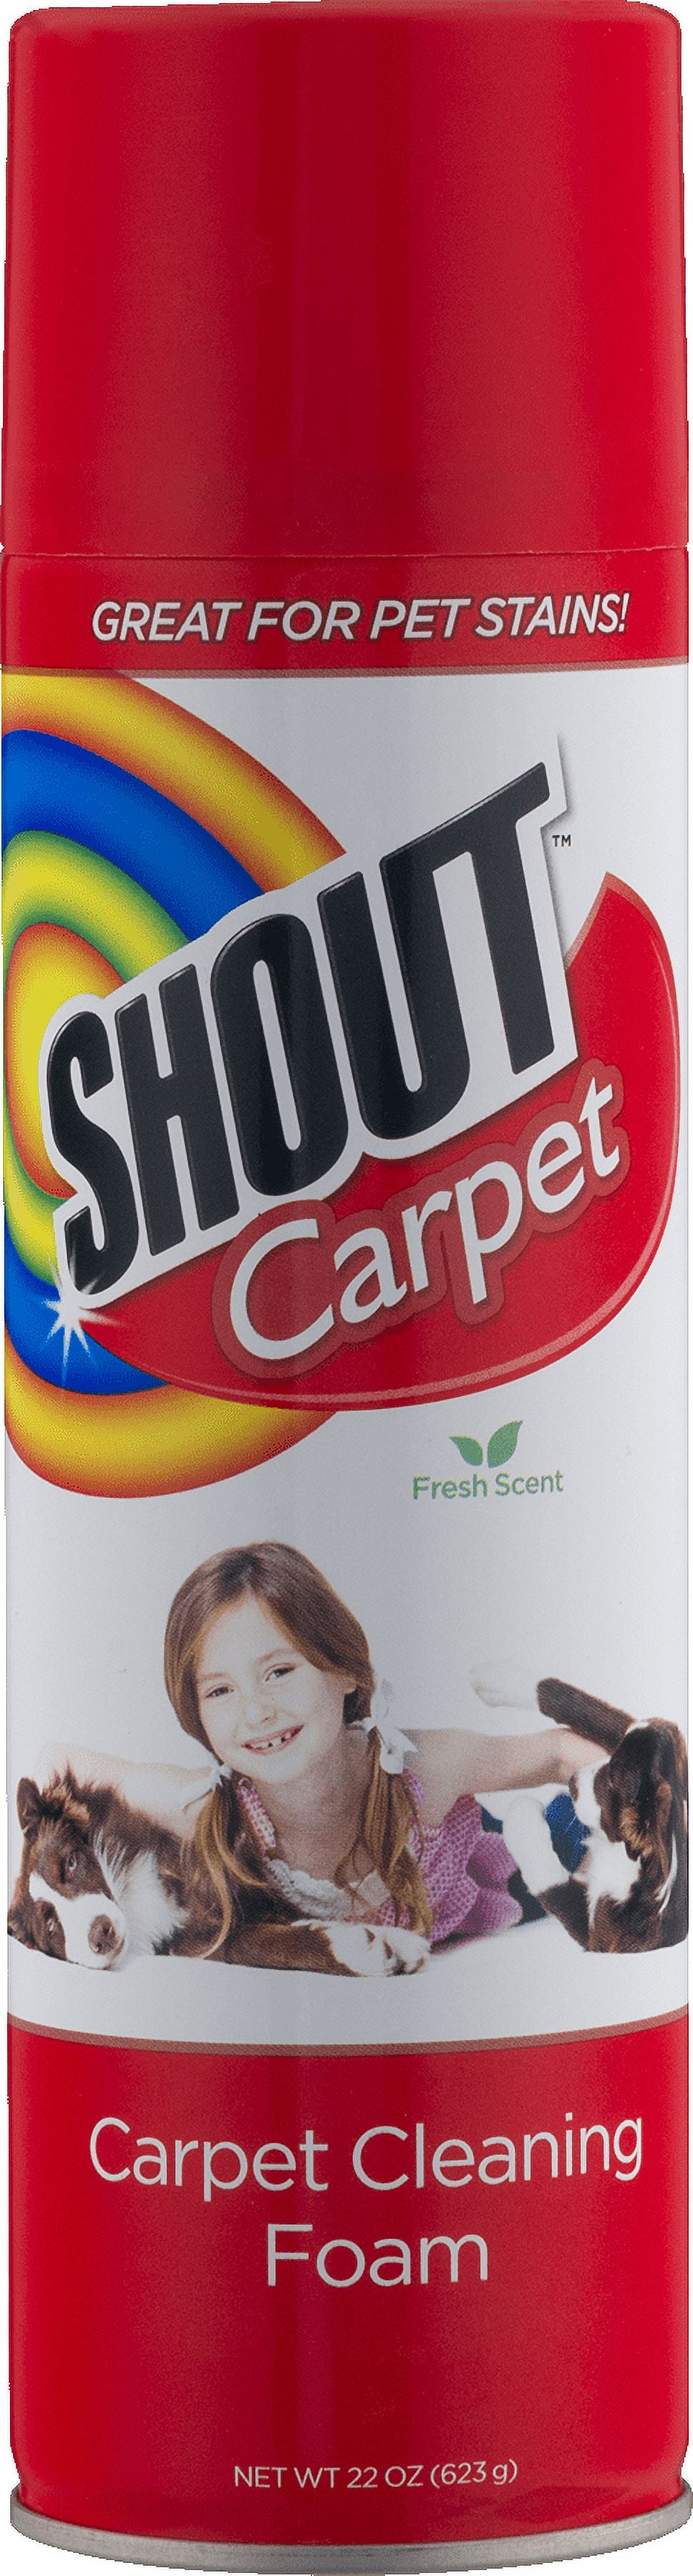 Shout Carpet Cleaning Foam, 22 Oz.